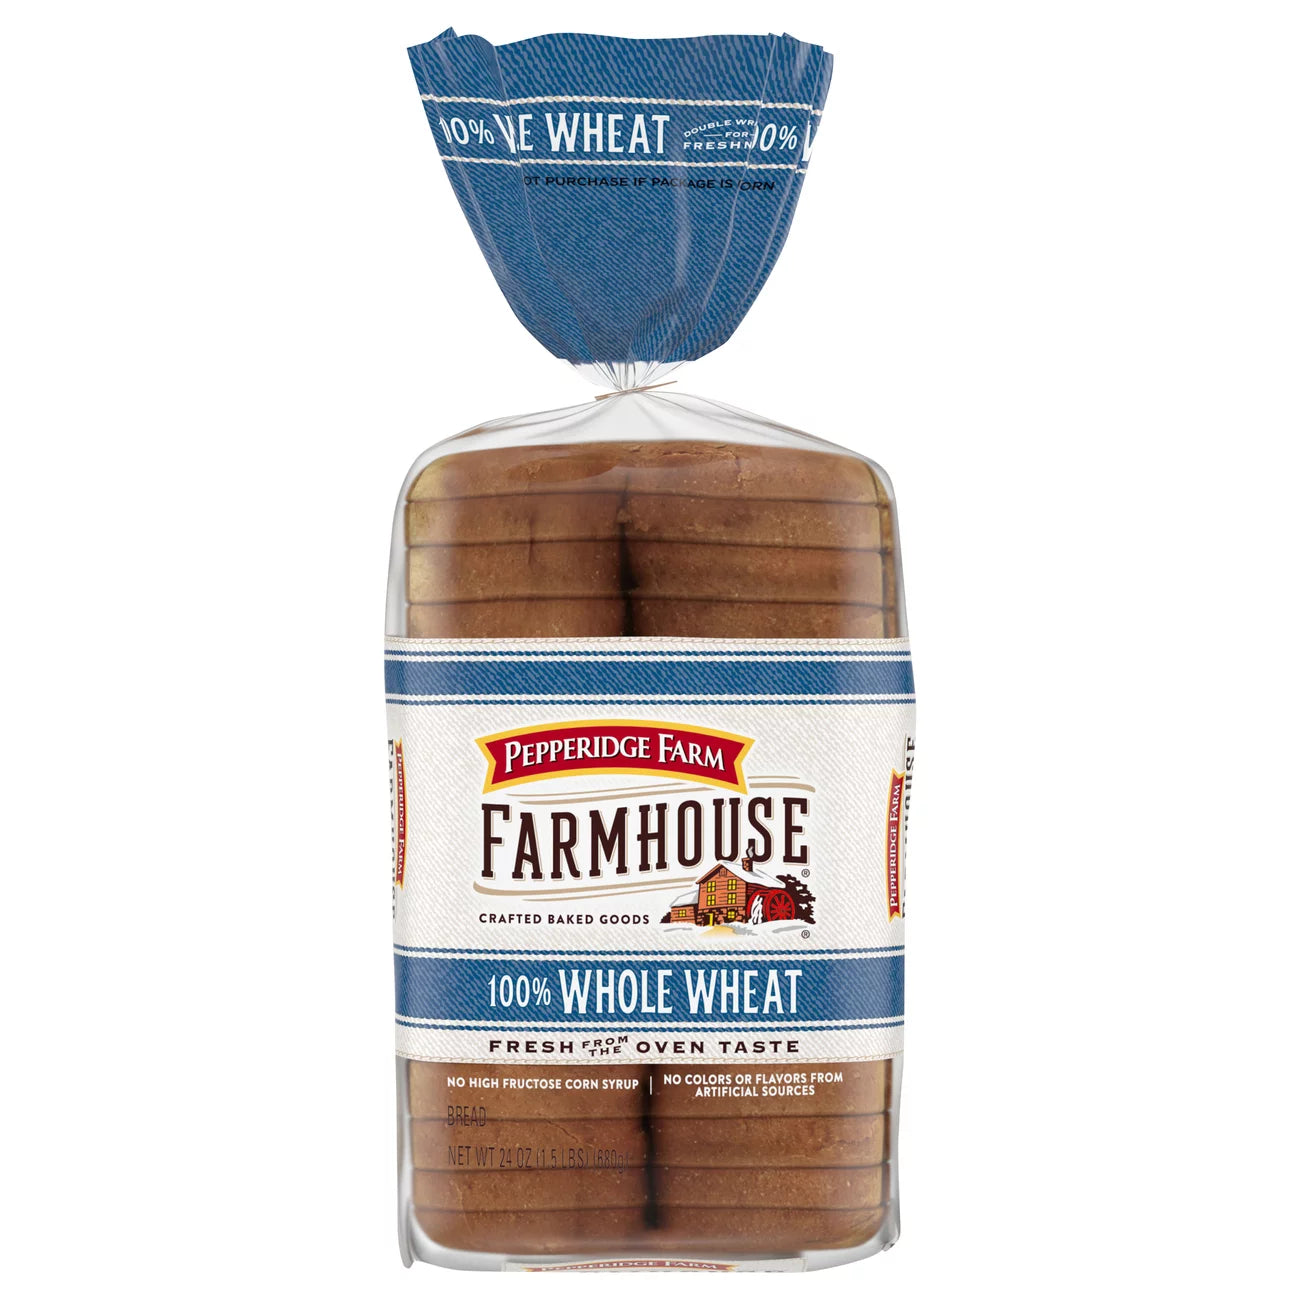 Pepperidge farms Farmhouse 100% Whole Wheat (Premium Bread)